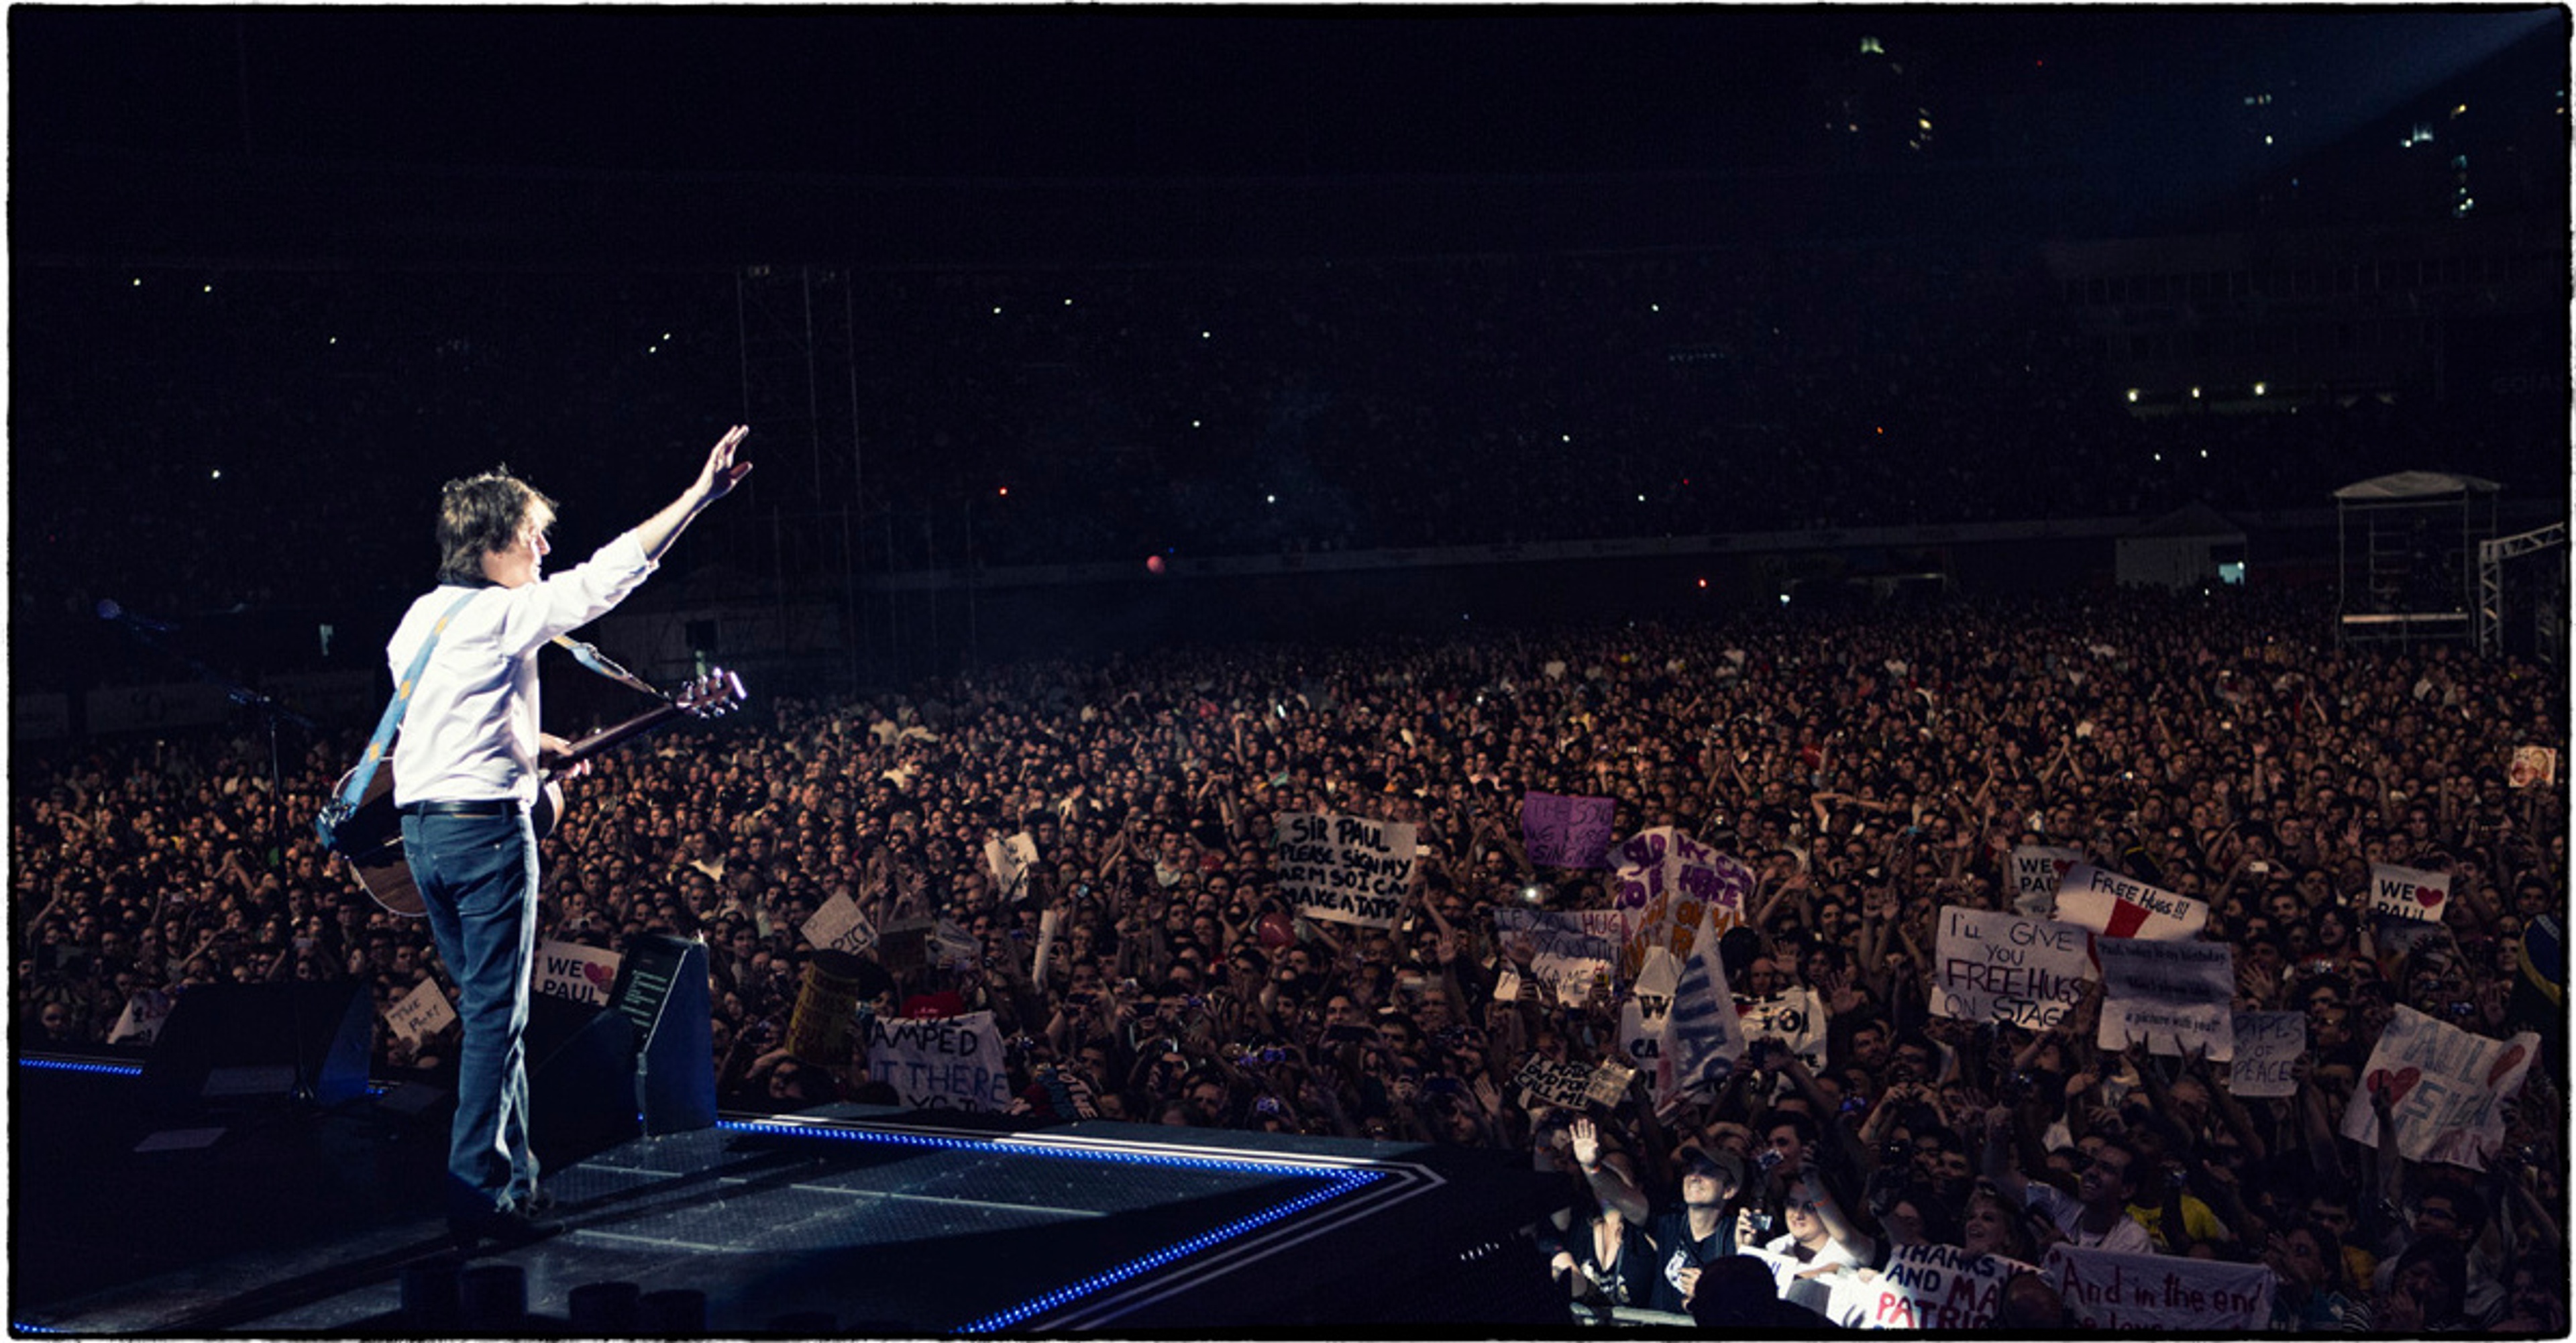 Paul and the crowd, Goiânia, Brazil, 6th May 2013